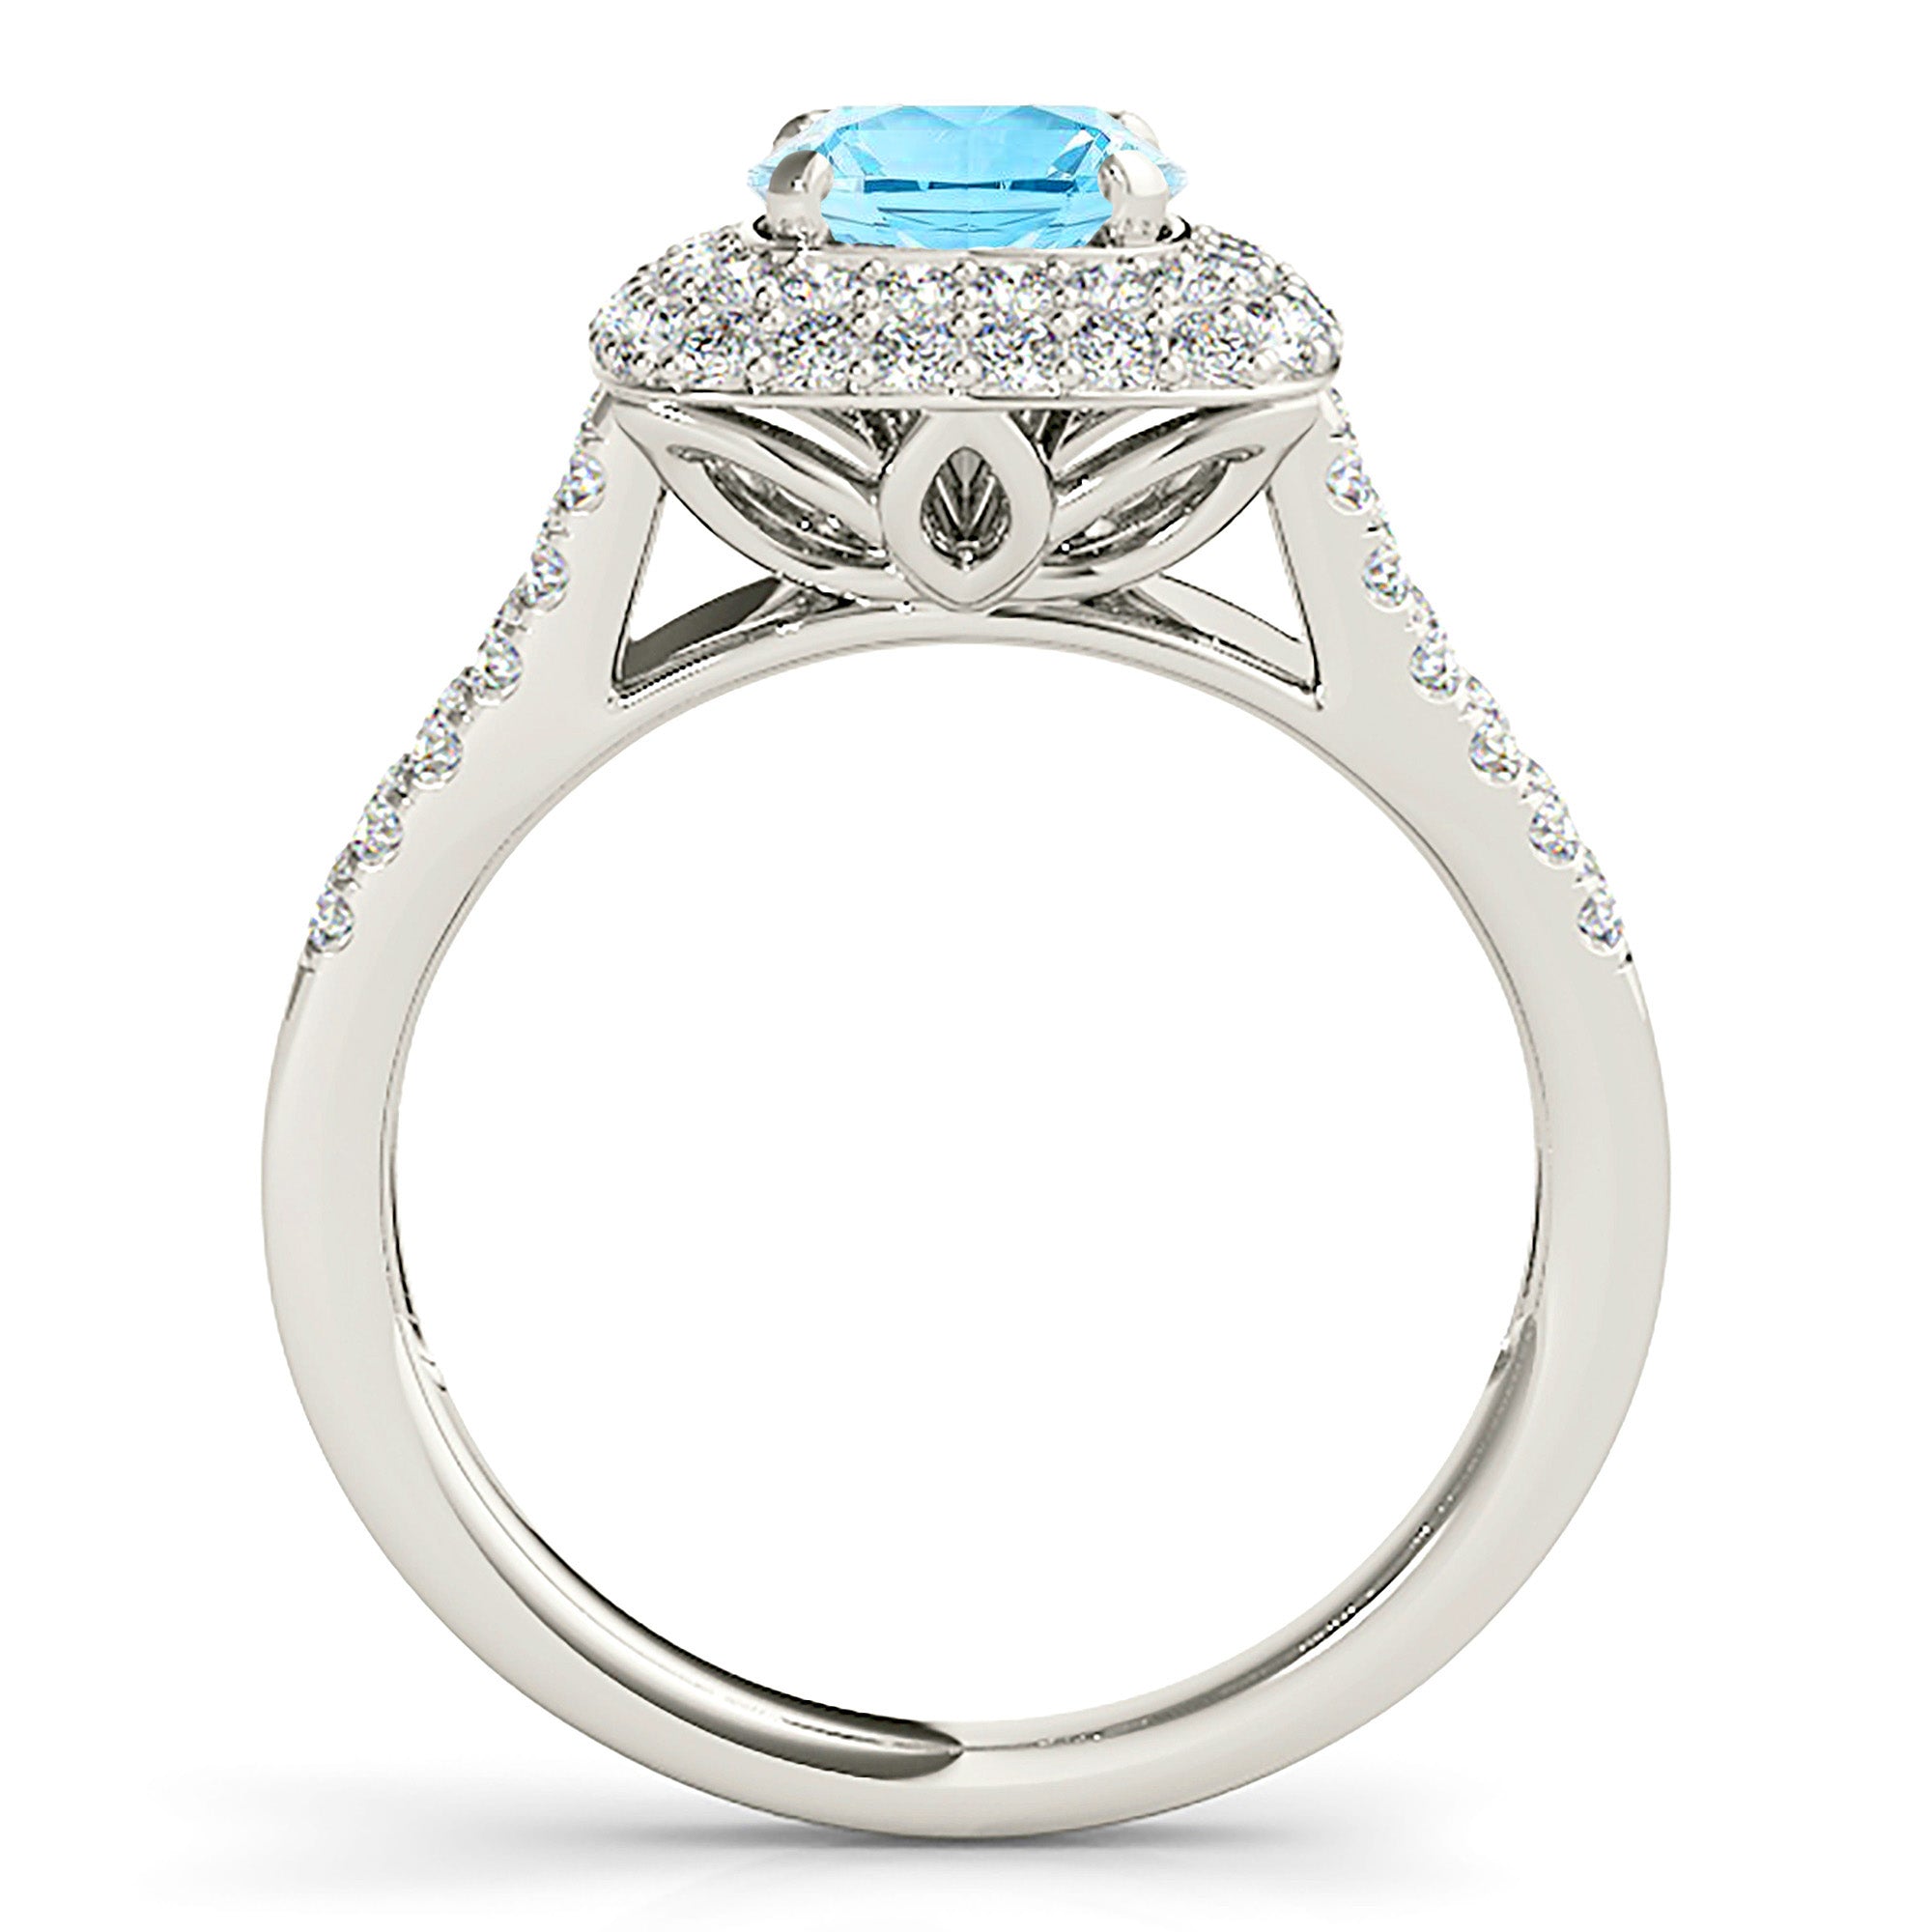 1.10 ct. Genuine Aquamarine Ring With 0.70 ctw. Diamond Cushion Halo And Split Diamond Band | Round Blue Aquamarine Halo Ring-in 14K/18K White, Yellow, Rose Gold and Platinum - Christmas Jewelry Gift -VIRABYANI